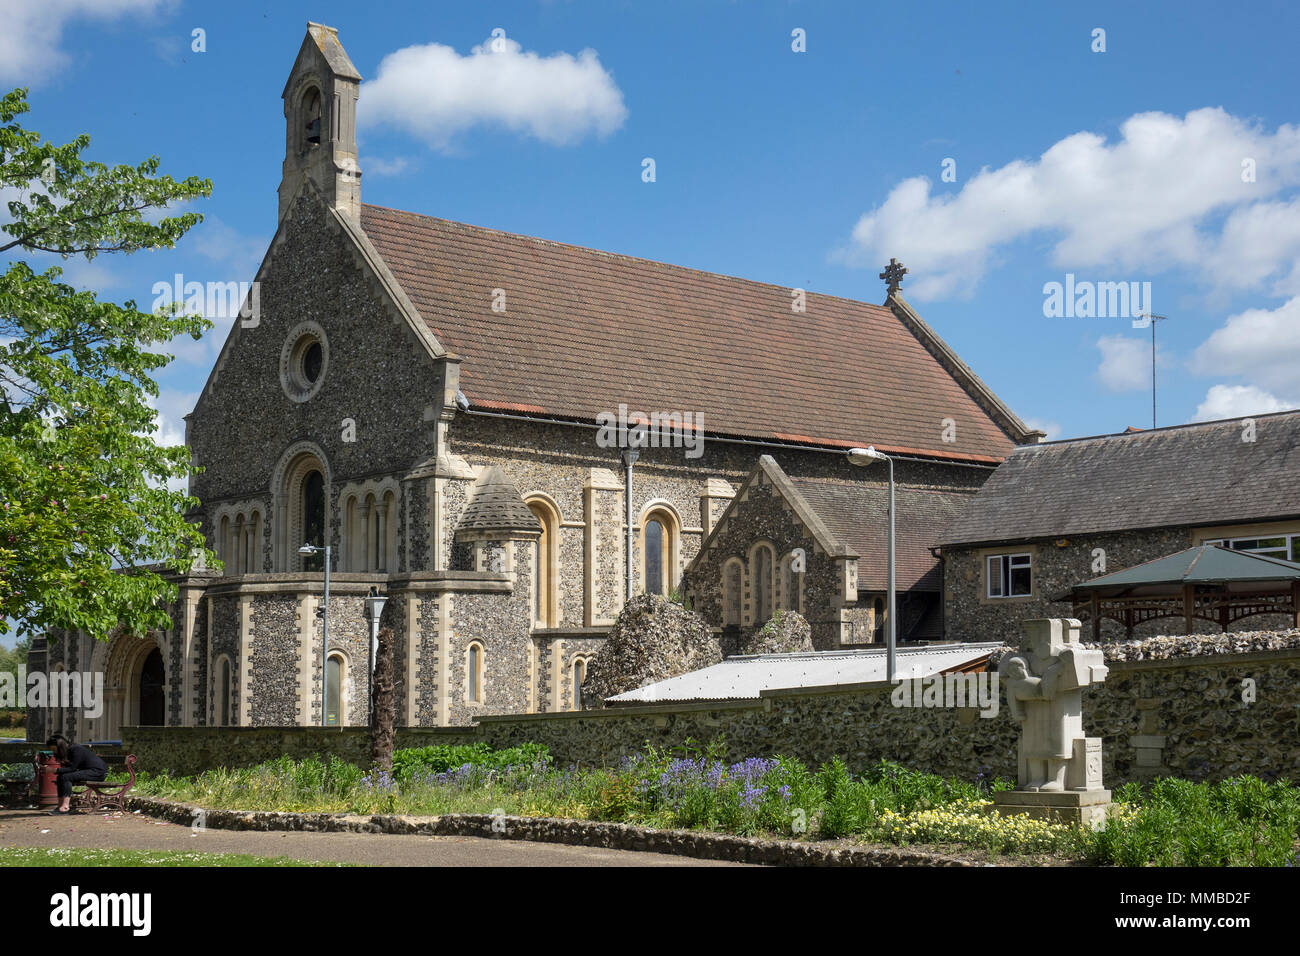 England, Berkshire, Reading, St.James's church Stock Photo